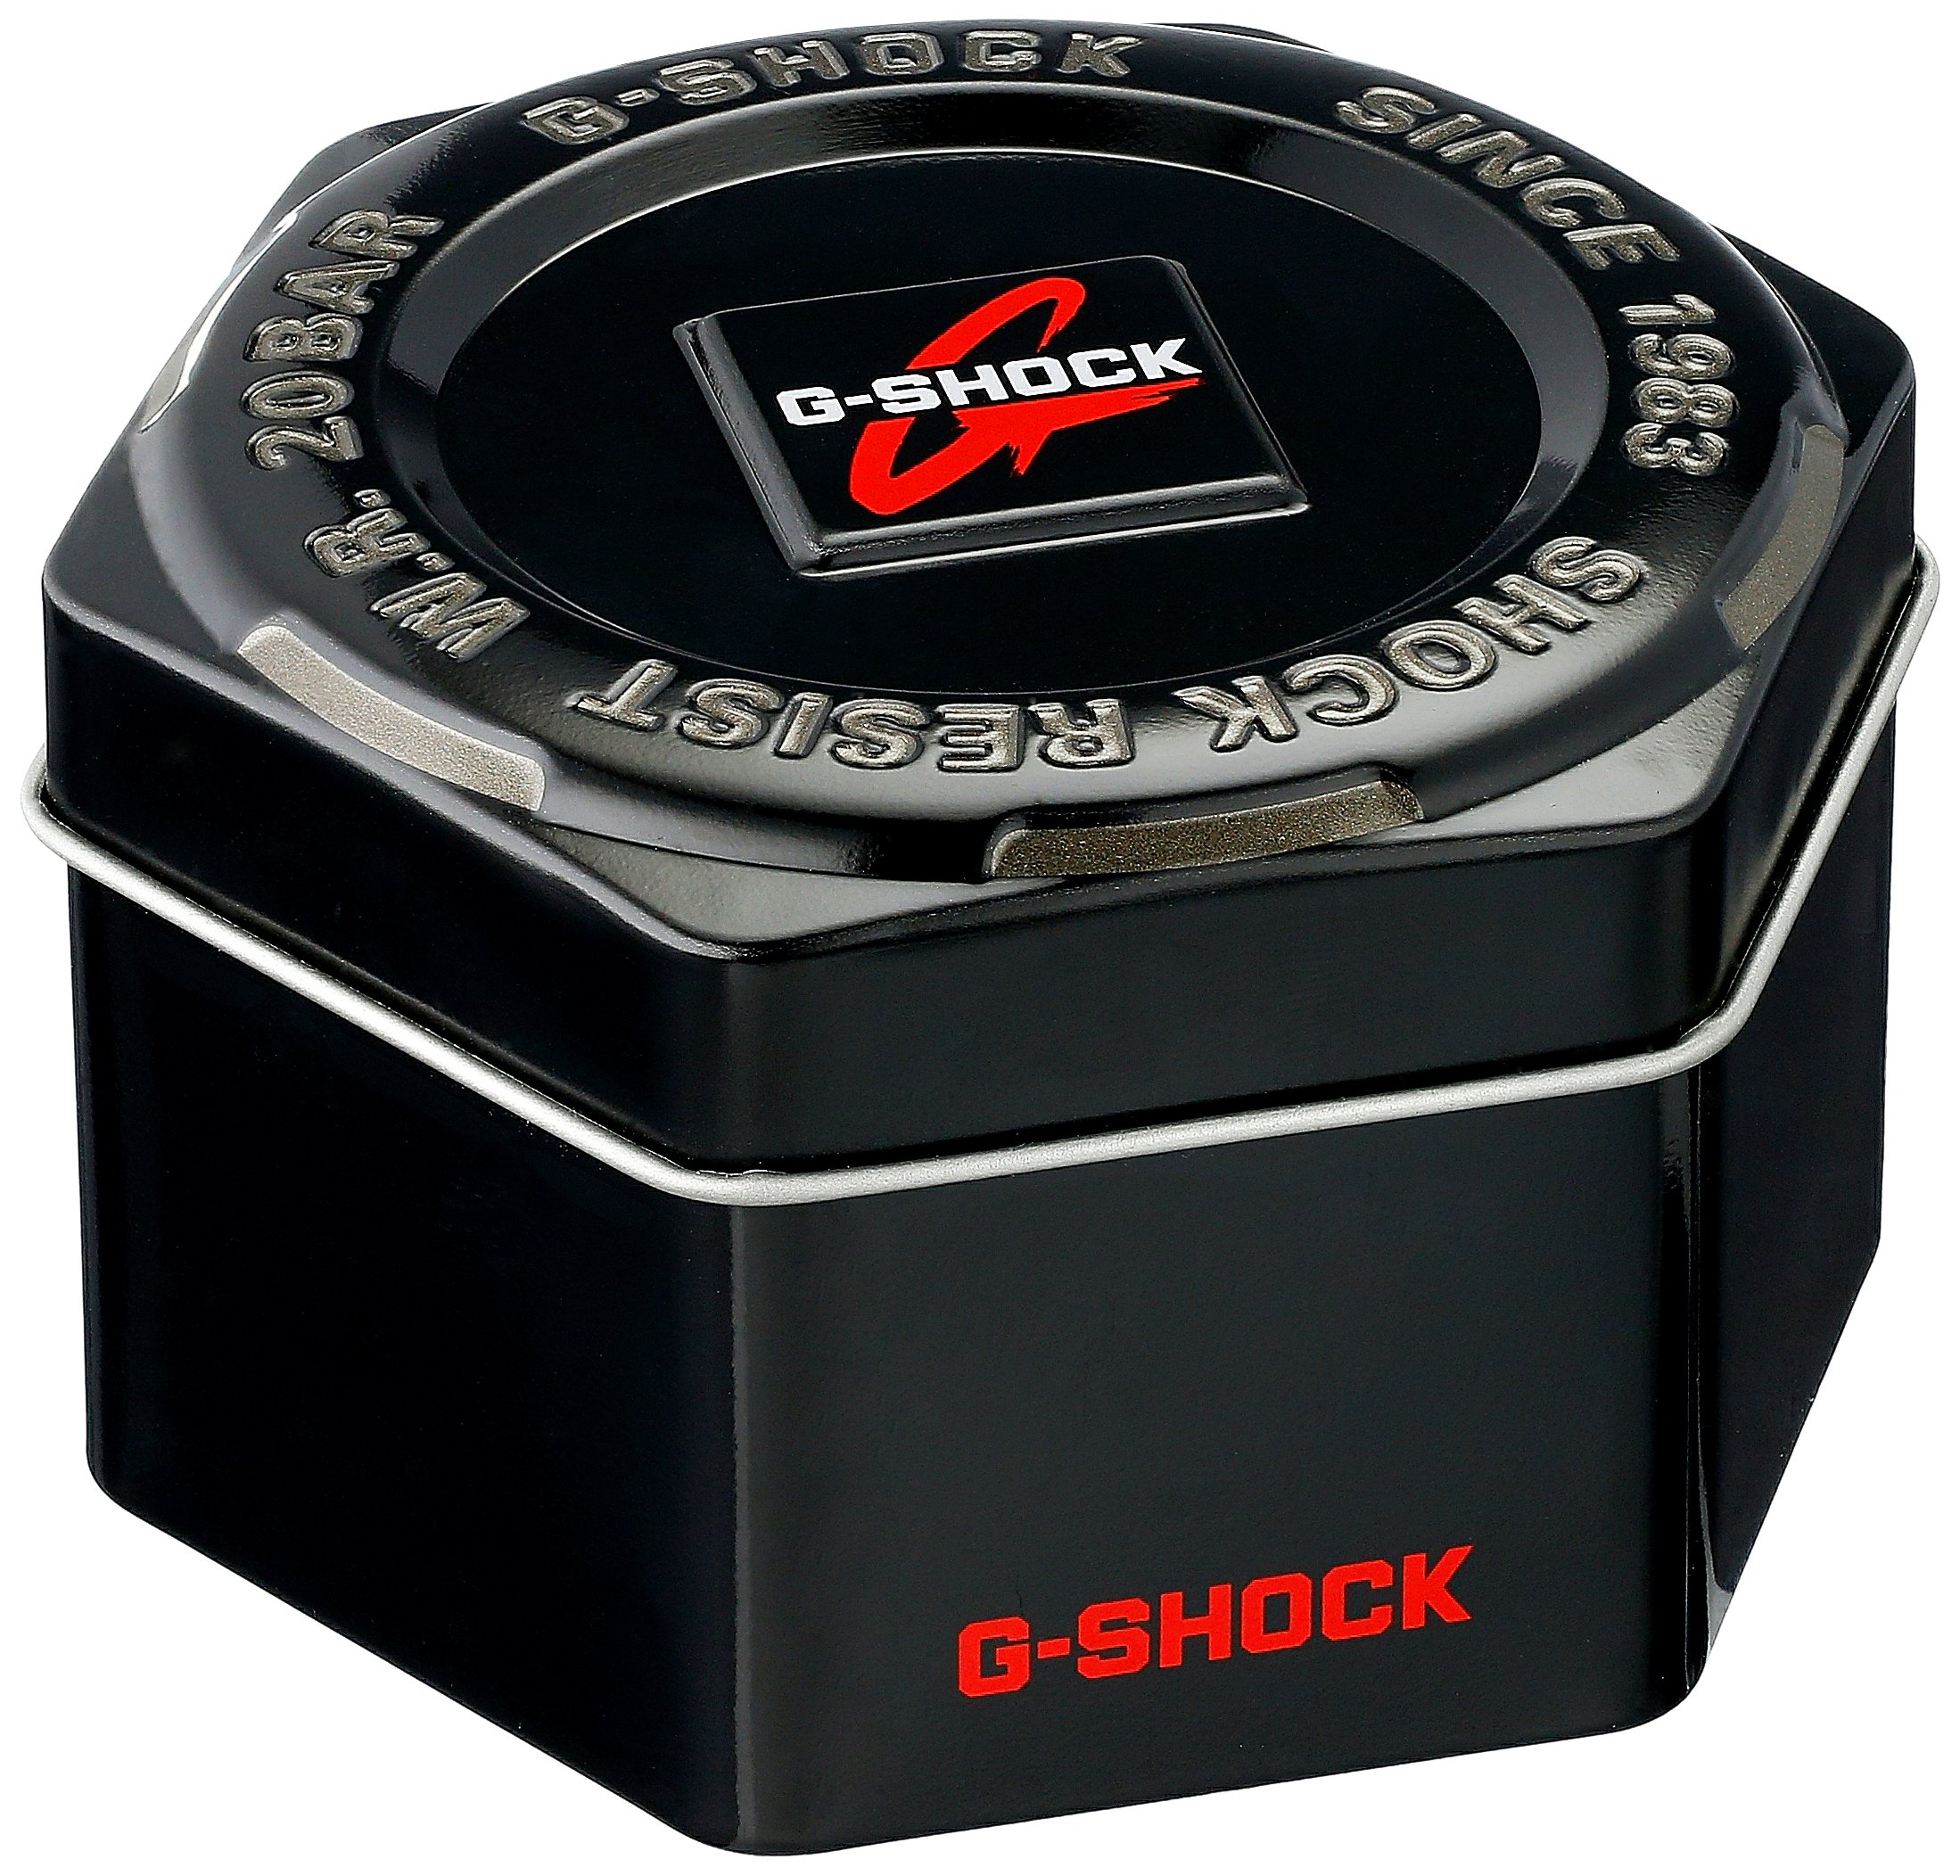 Casio G-Shock Mudman Super Dual Illuminator Men's Quartz 52mm Digital Watch G9000-1V